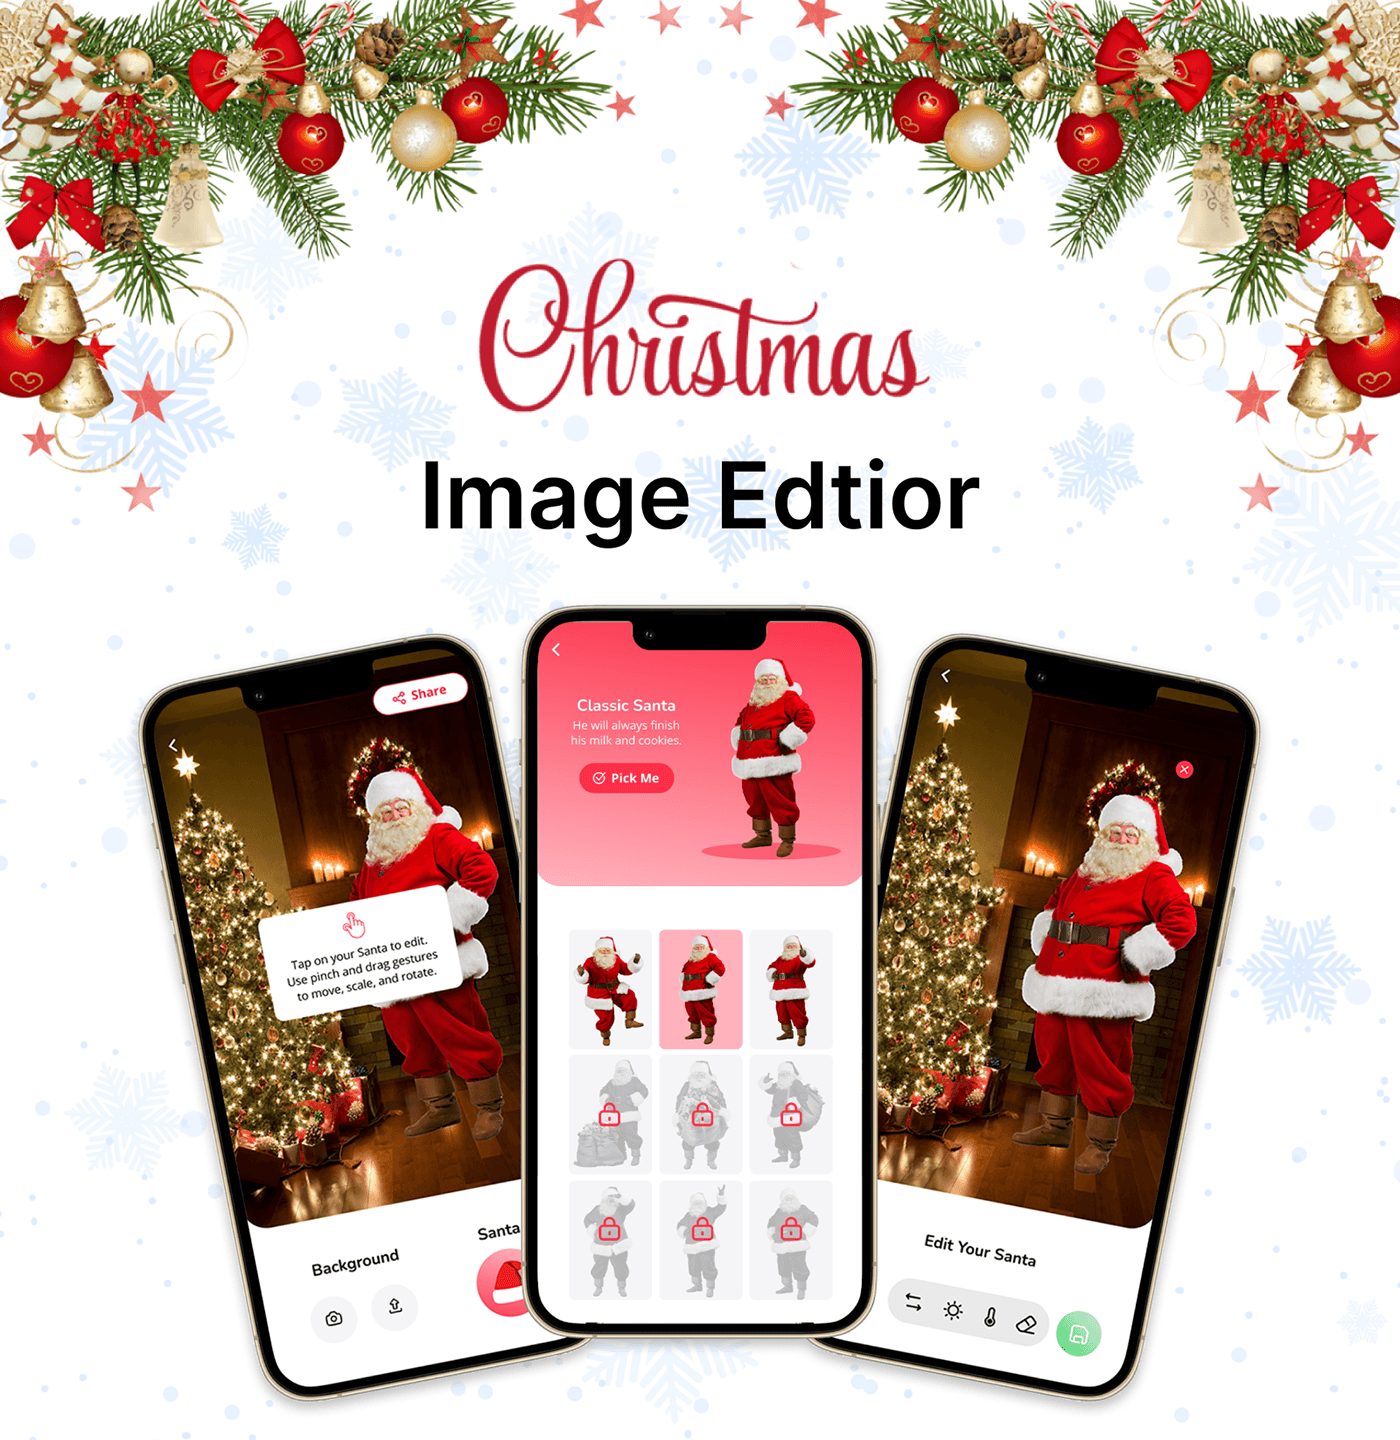 uiuxdesign user experience Figma Prototype digital design #christmasimageeditor #festiveapp #holidayphotoediting #santaspotter Christmas creativity Mobileapp Design